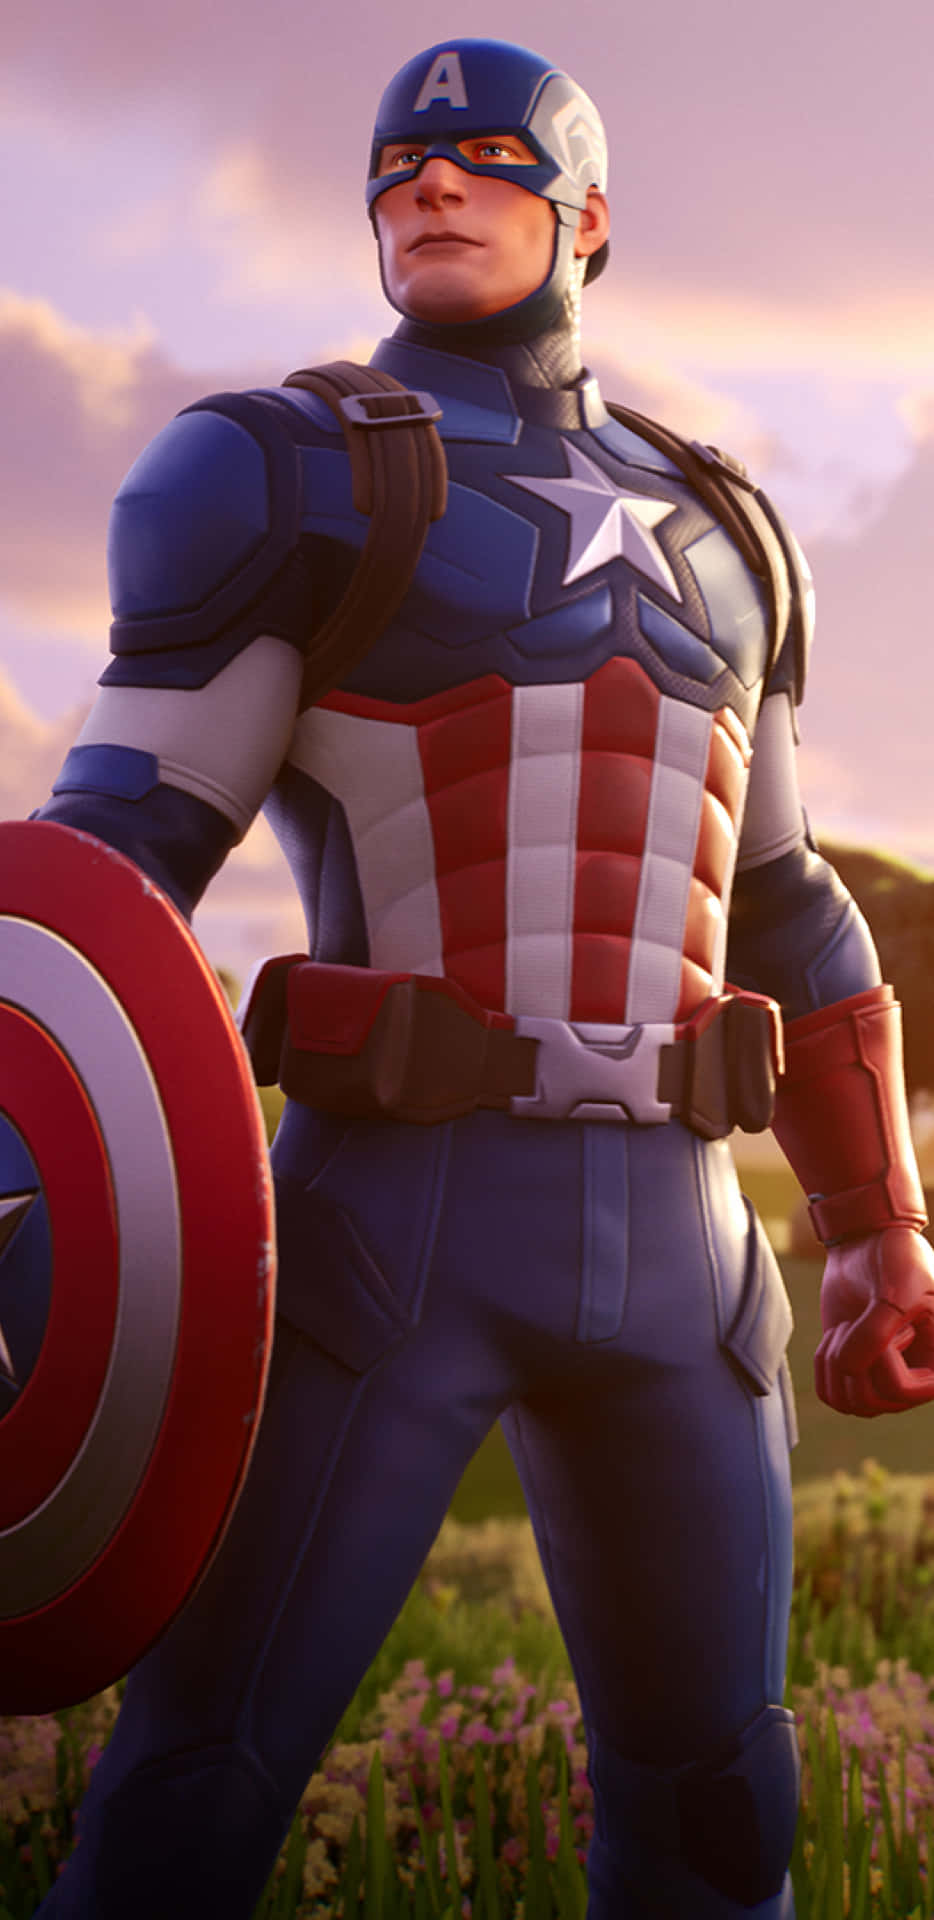 Fondode Pantalla Para Pixel 3xl De Captain America Con La Skin De Fortnite.